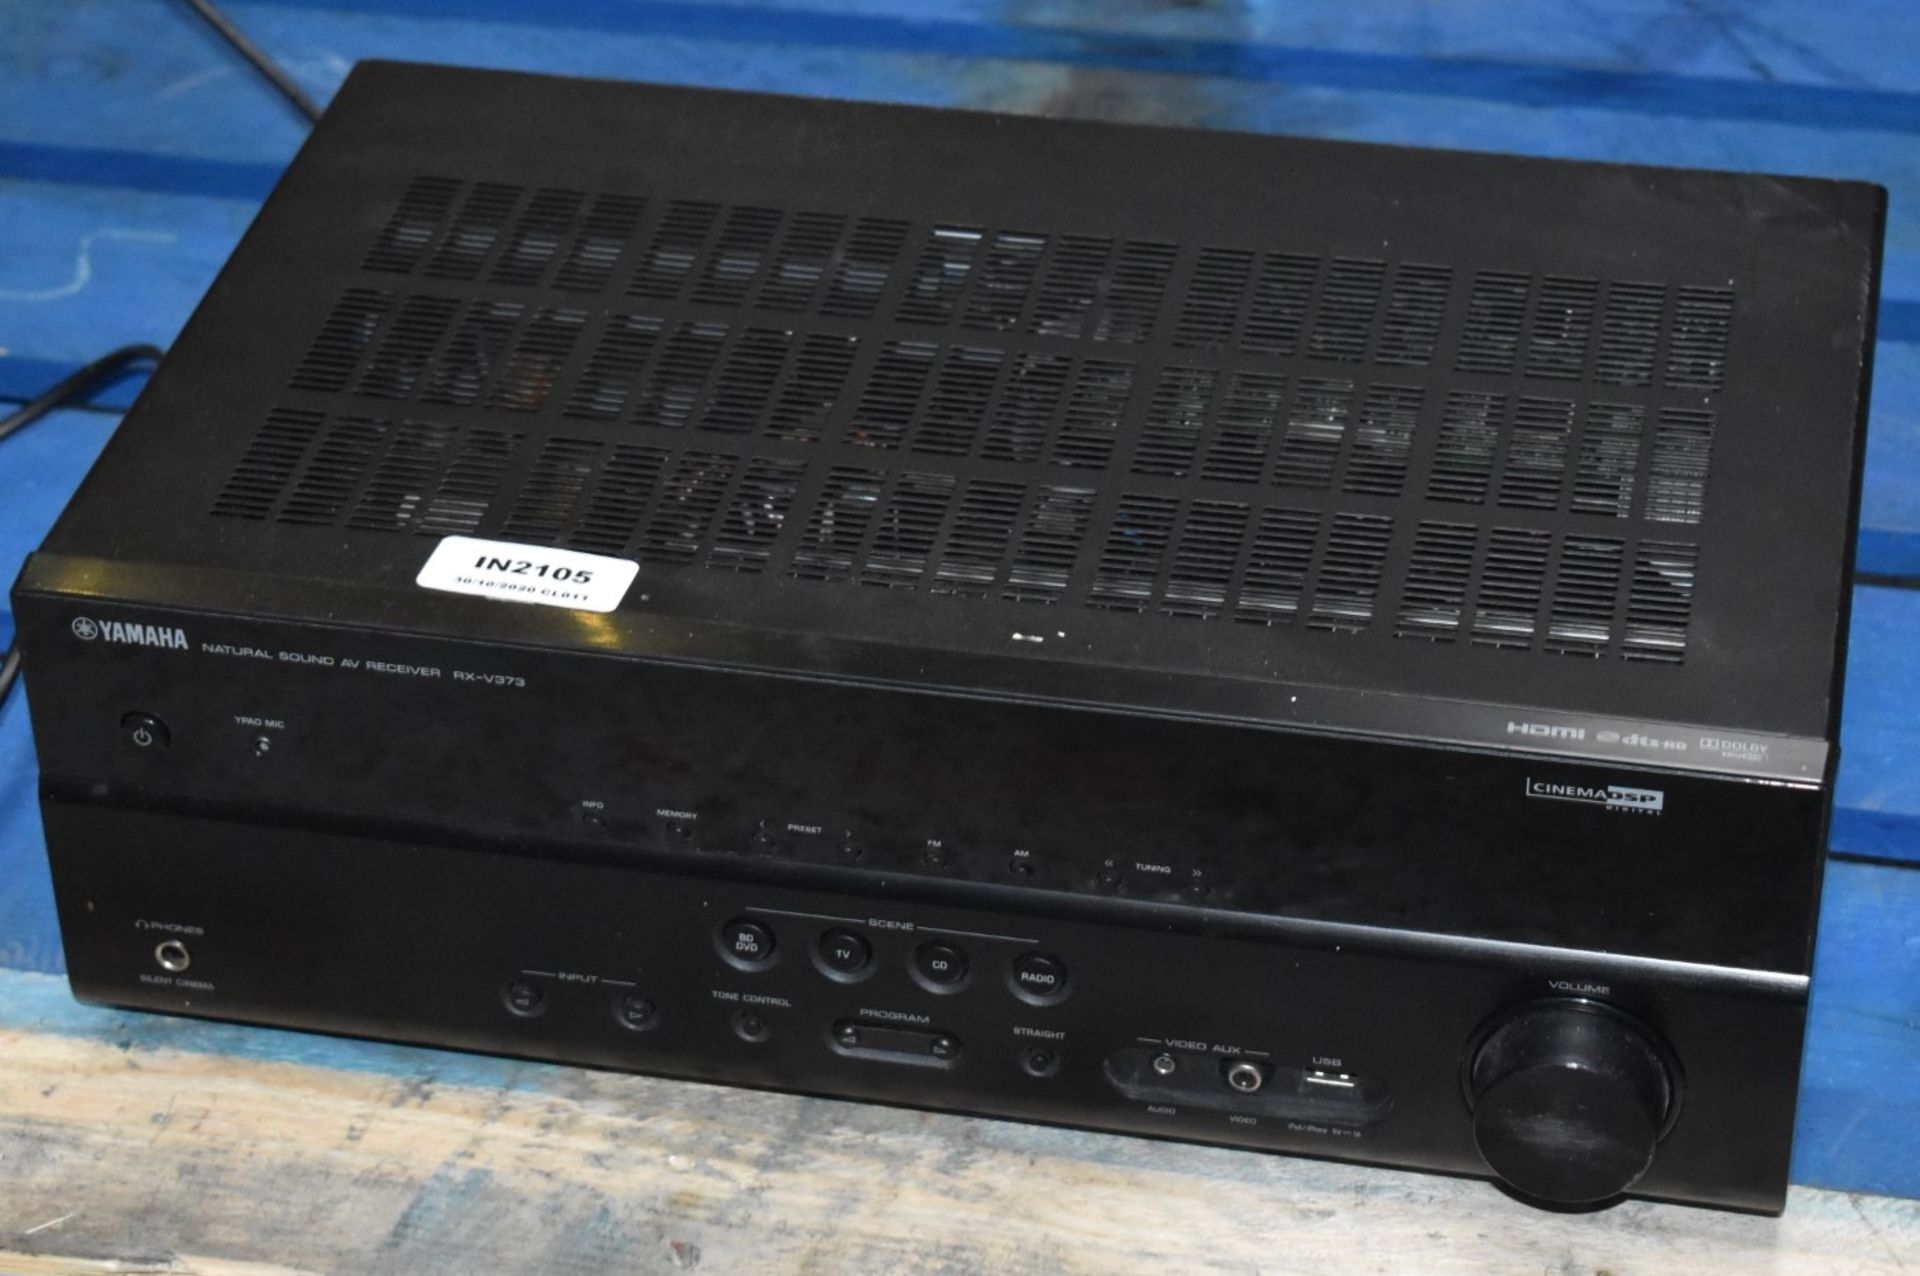 1 x Yamaha RX-V373 Natural Sound AV Receiver - DSP Cinema Amp - Ref: In2105 Pal1 WH1 - CL546 - - Image 3 of 6